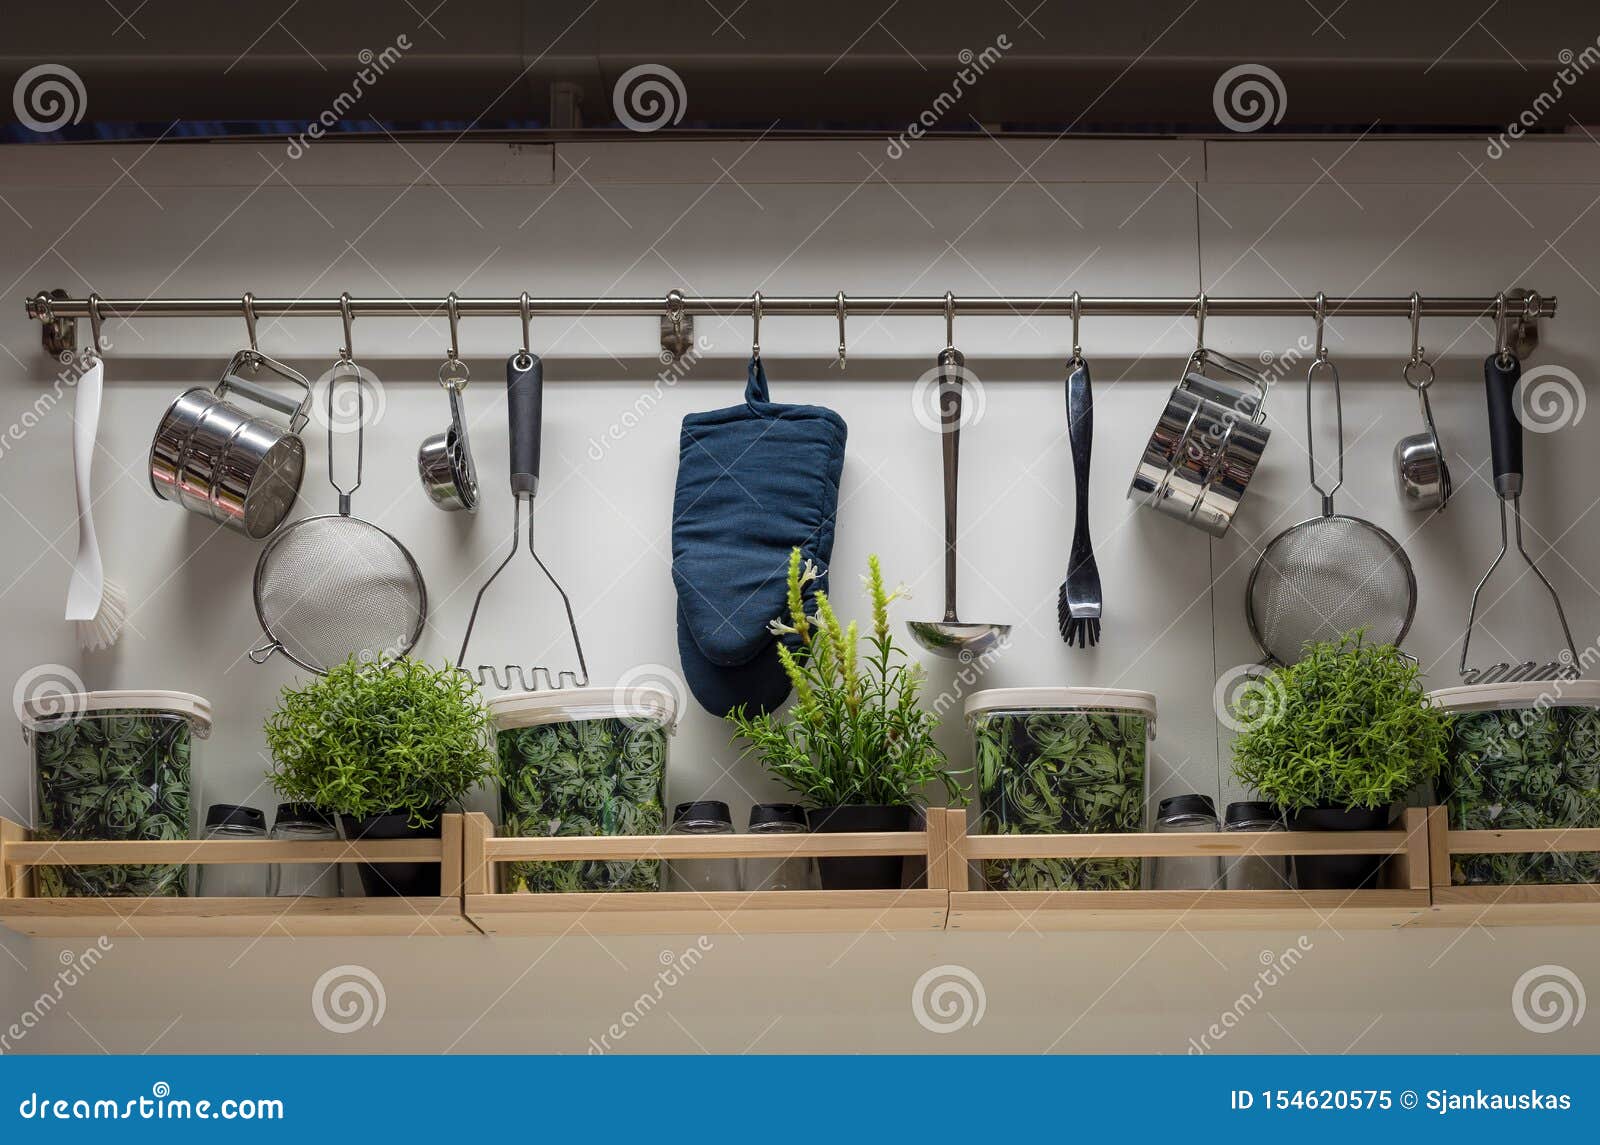 kitchen utensils on the wall, interior design stock image